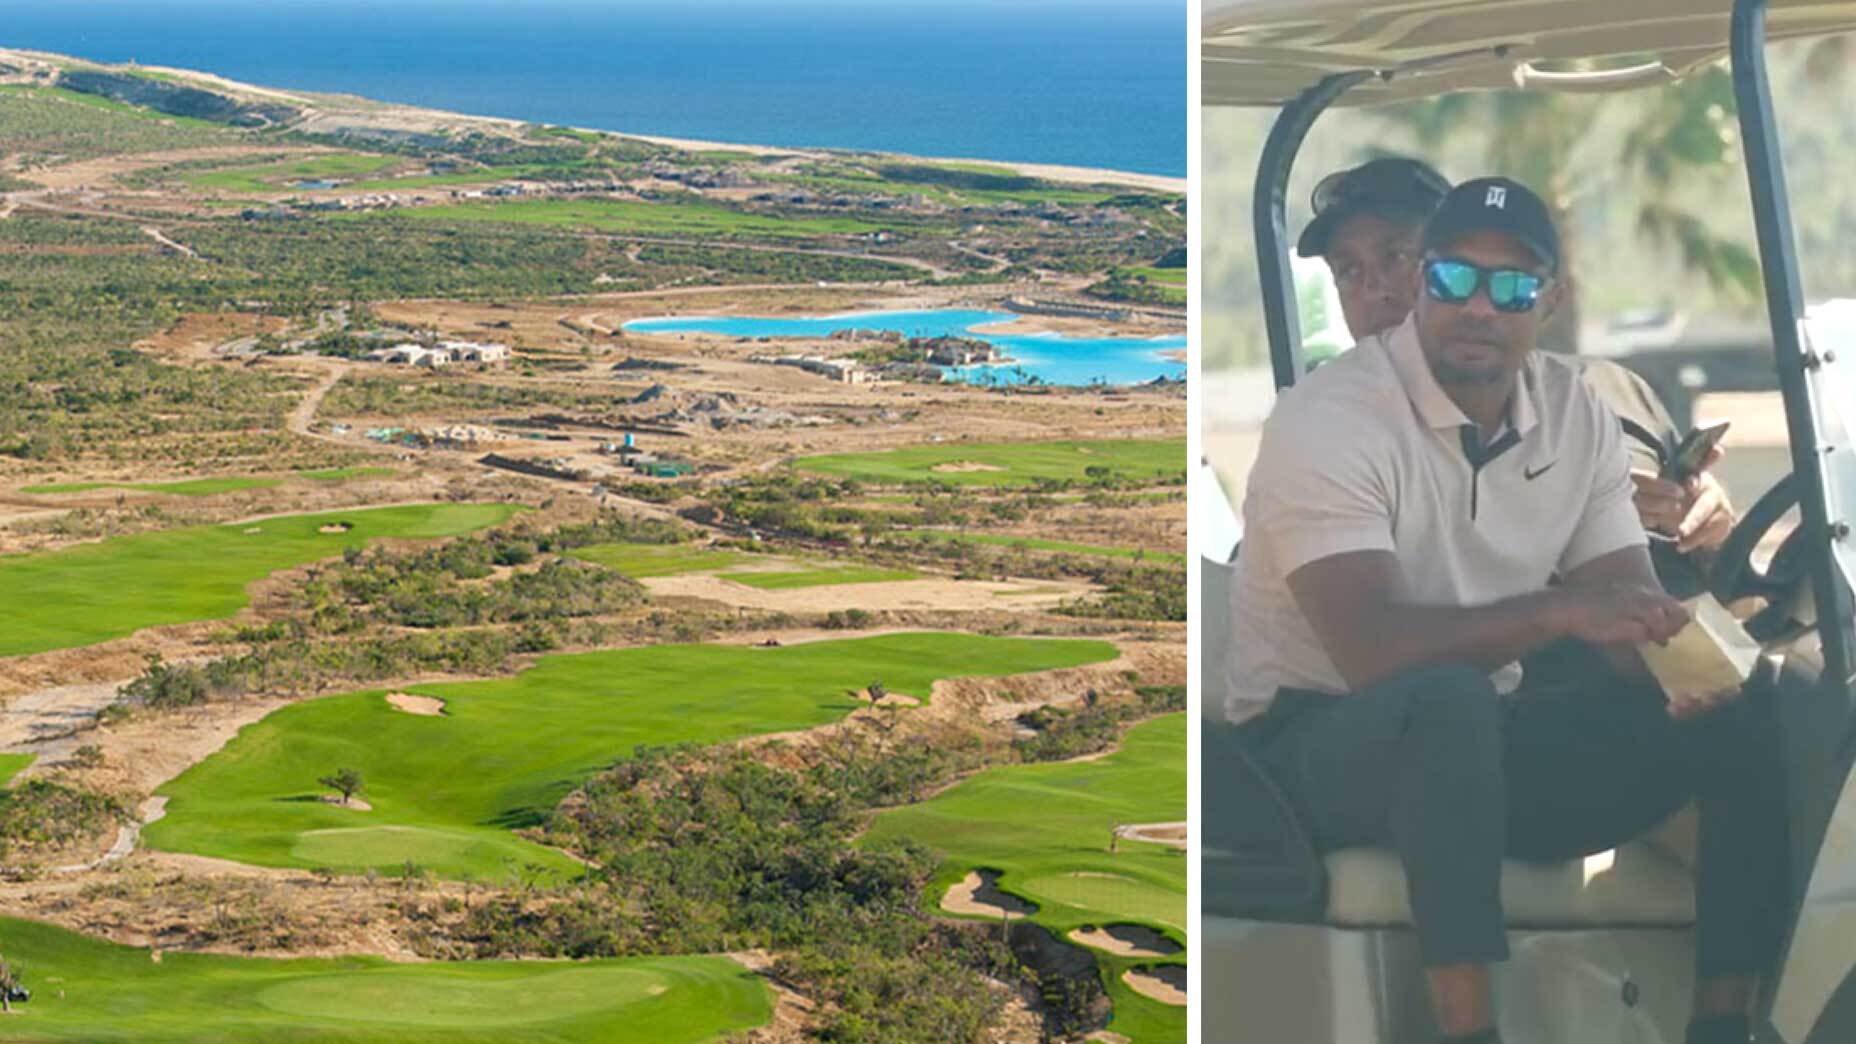 Vista aérea del campo de golf El Cardonal en México;  Tiger Woods en un carrito de golf en El Cordonel